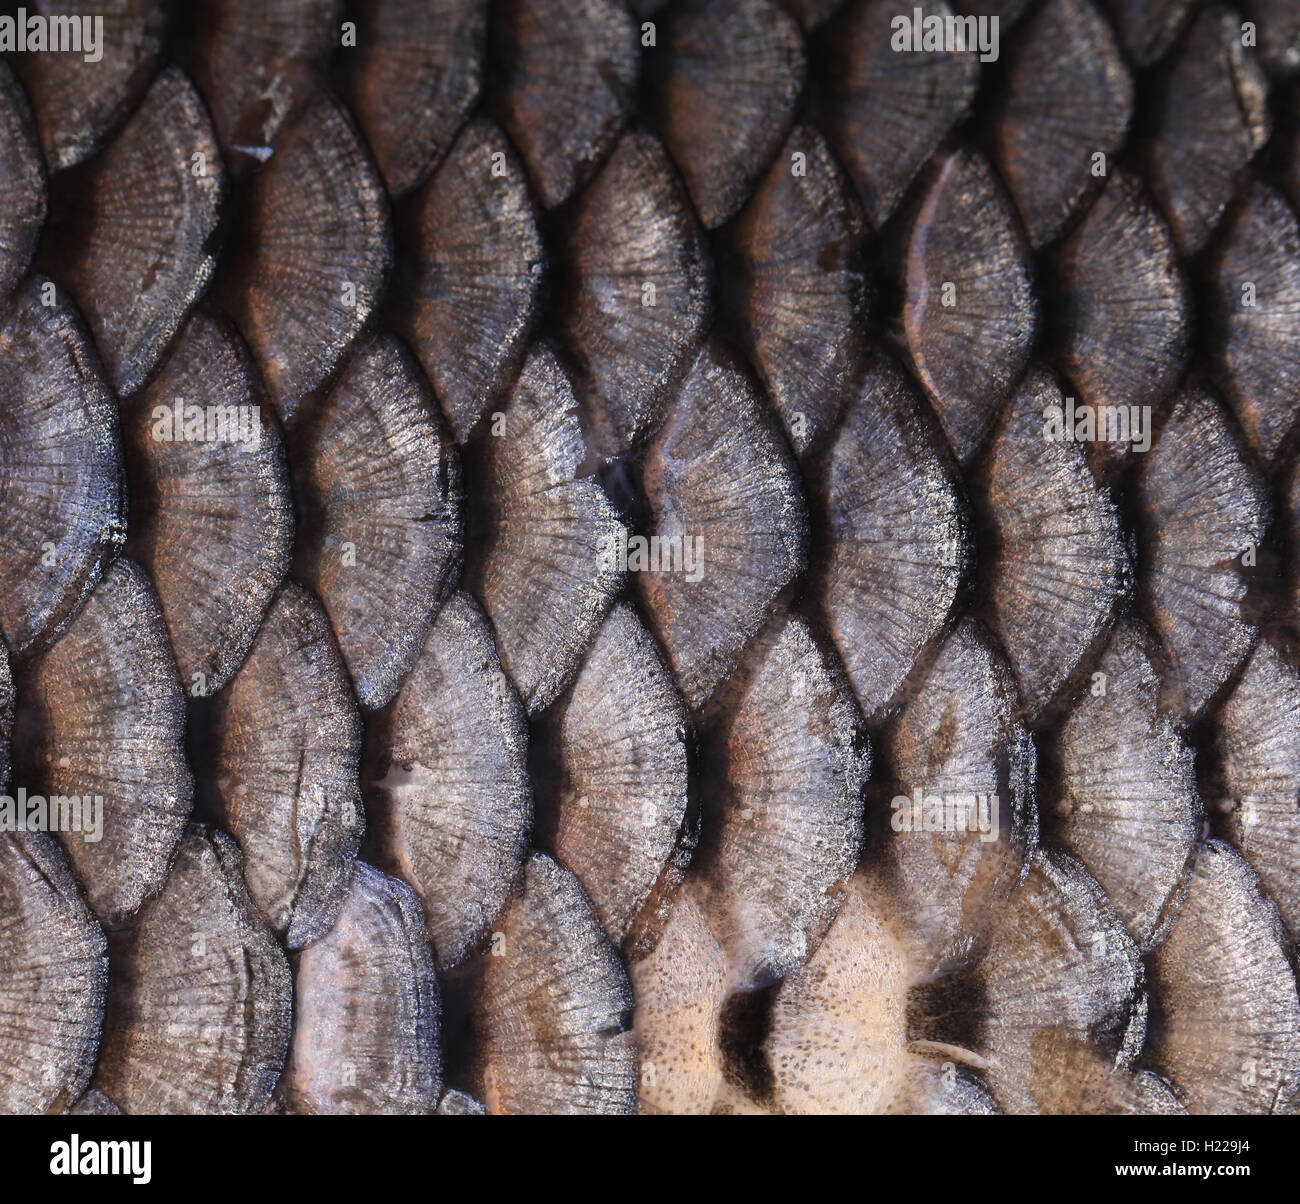 https://c8.alamy.com/comp/H229J4/texture-of-fish-scales-close-up-H229J4.jpg